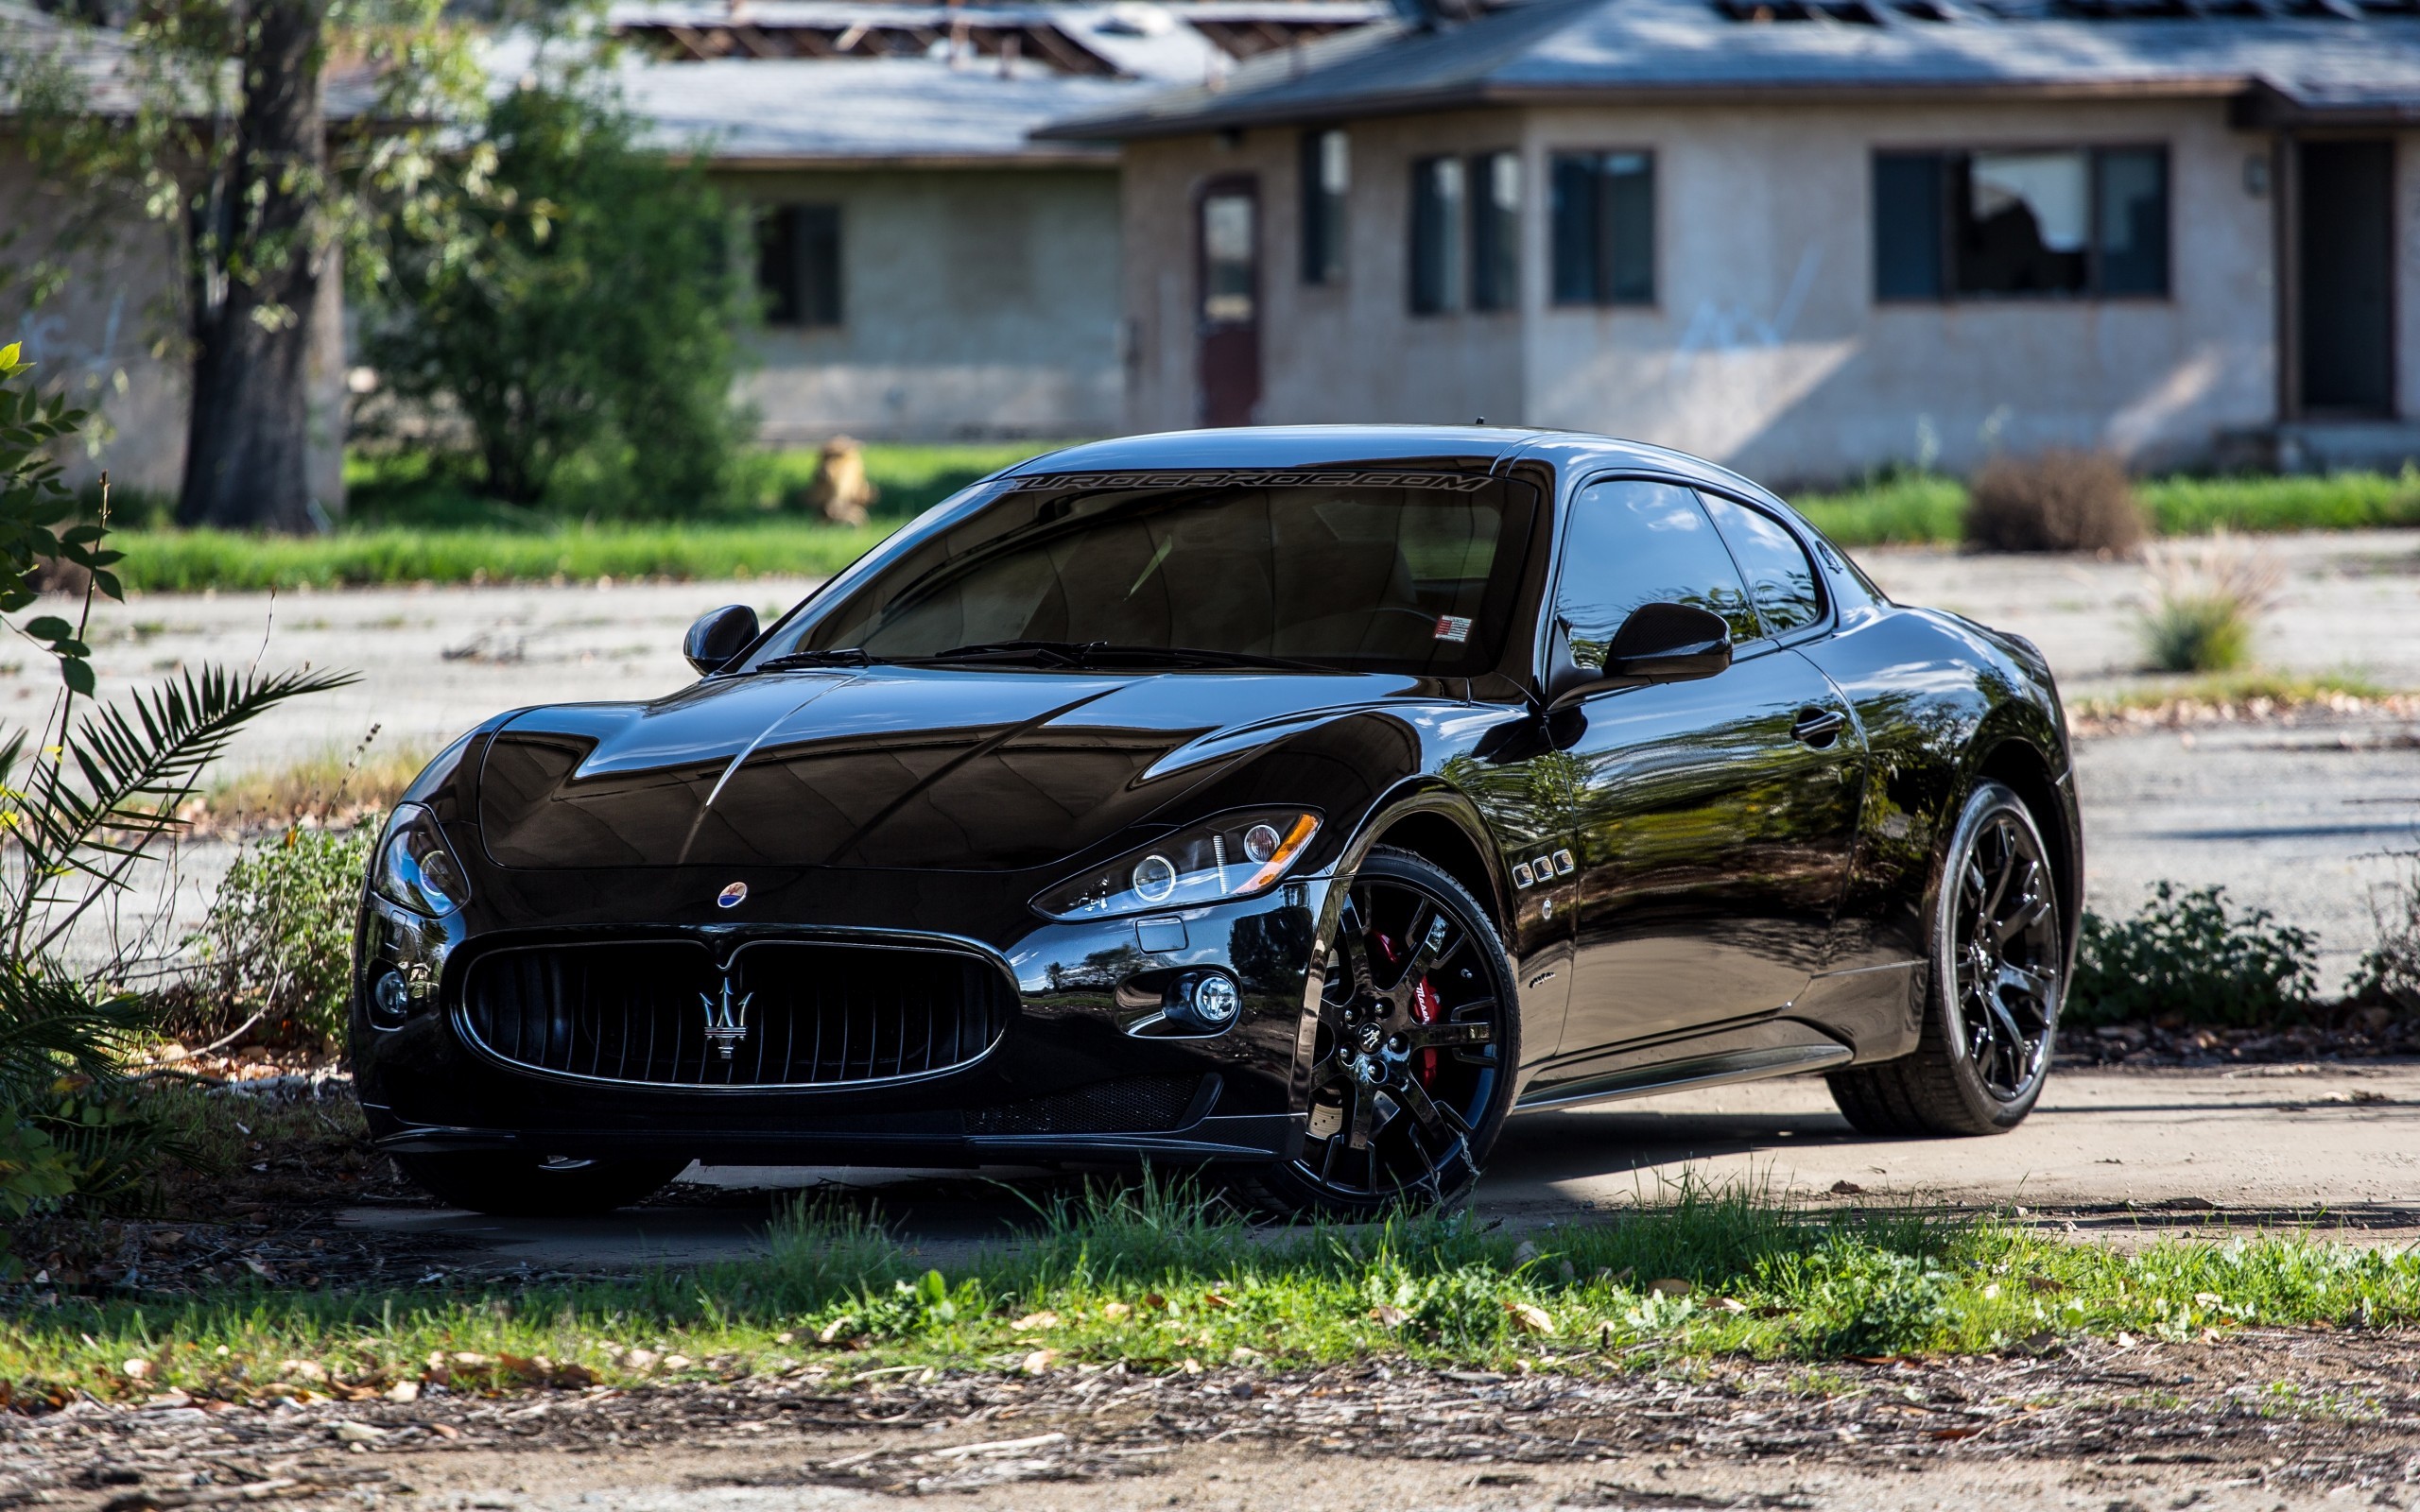 Cars Maserati Granturismo Mc Stradale Wallpapers Hd Desktop And Mobile Backgrounds